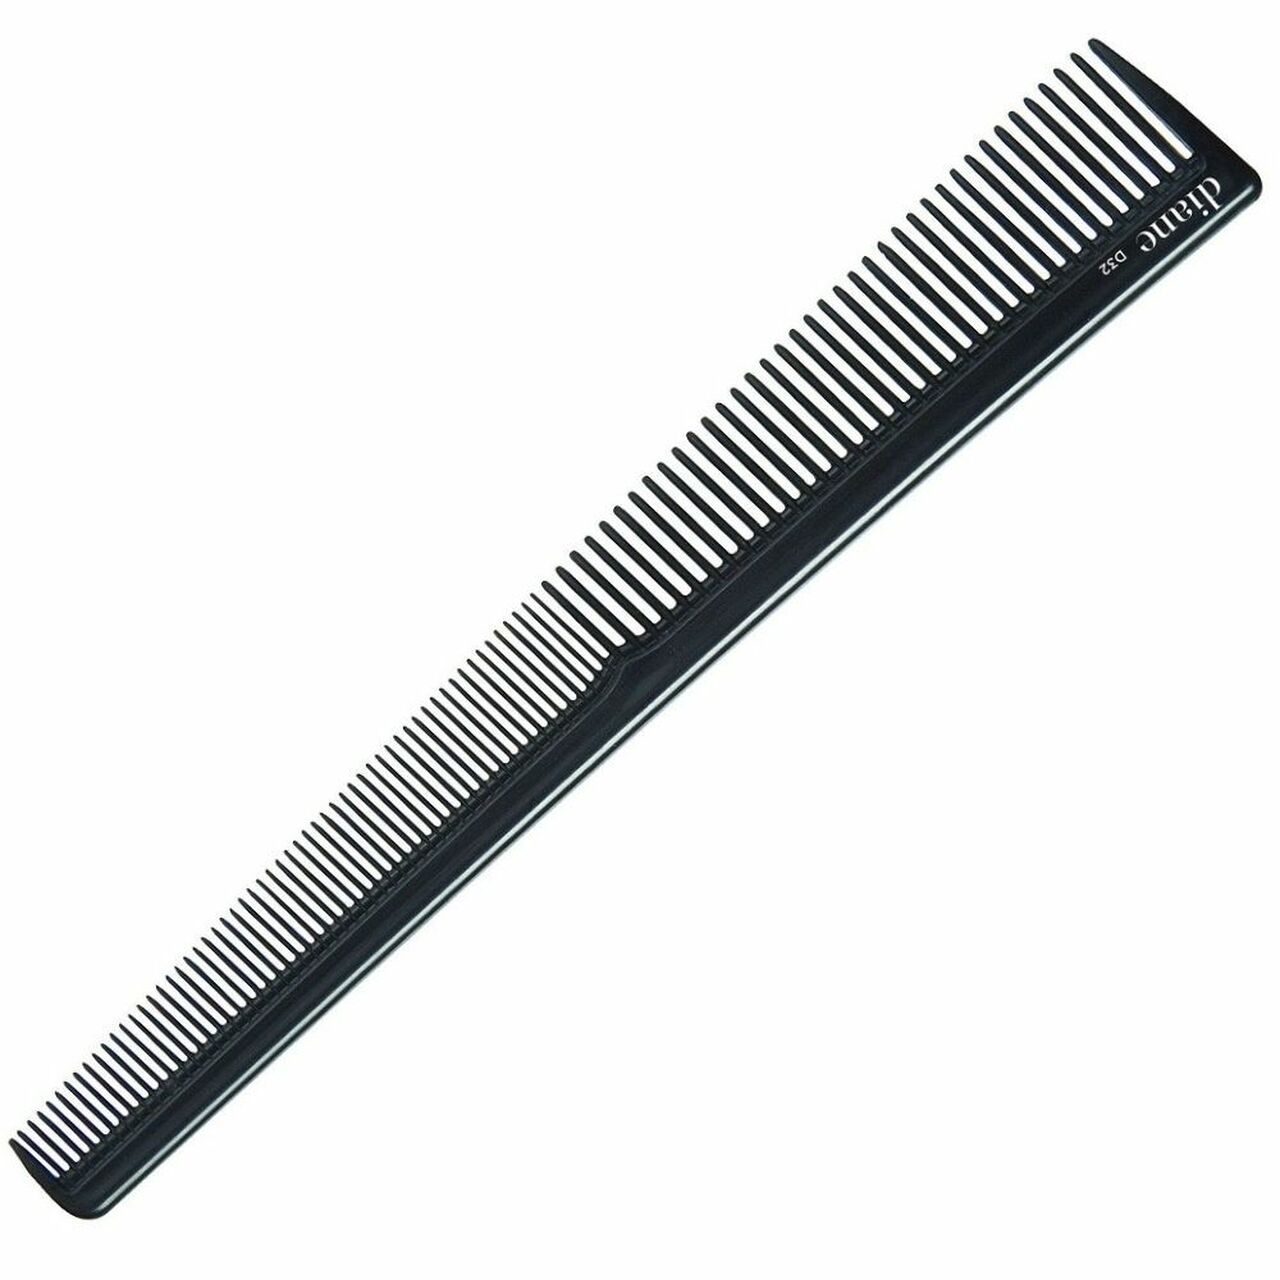 7 1/4" Barber Comb Black | D32 COMBS & BRUSHES DIANE 